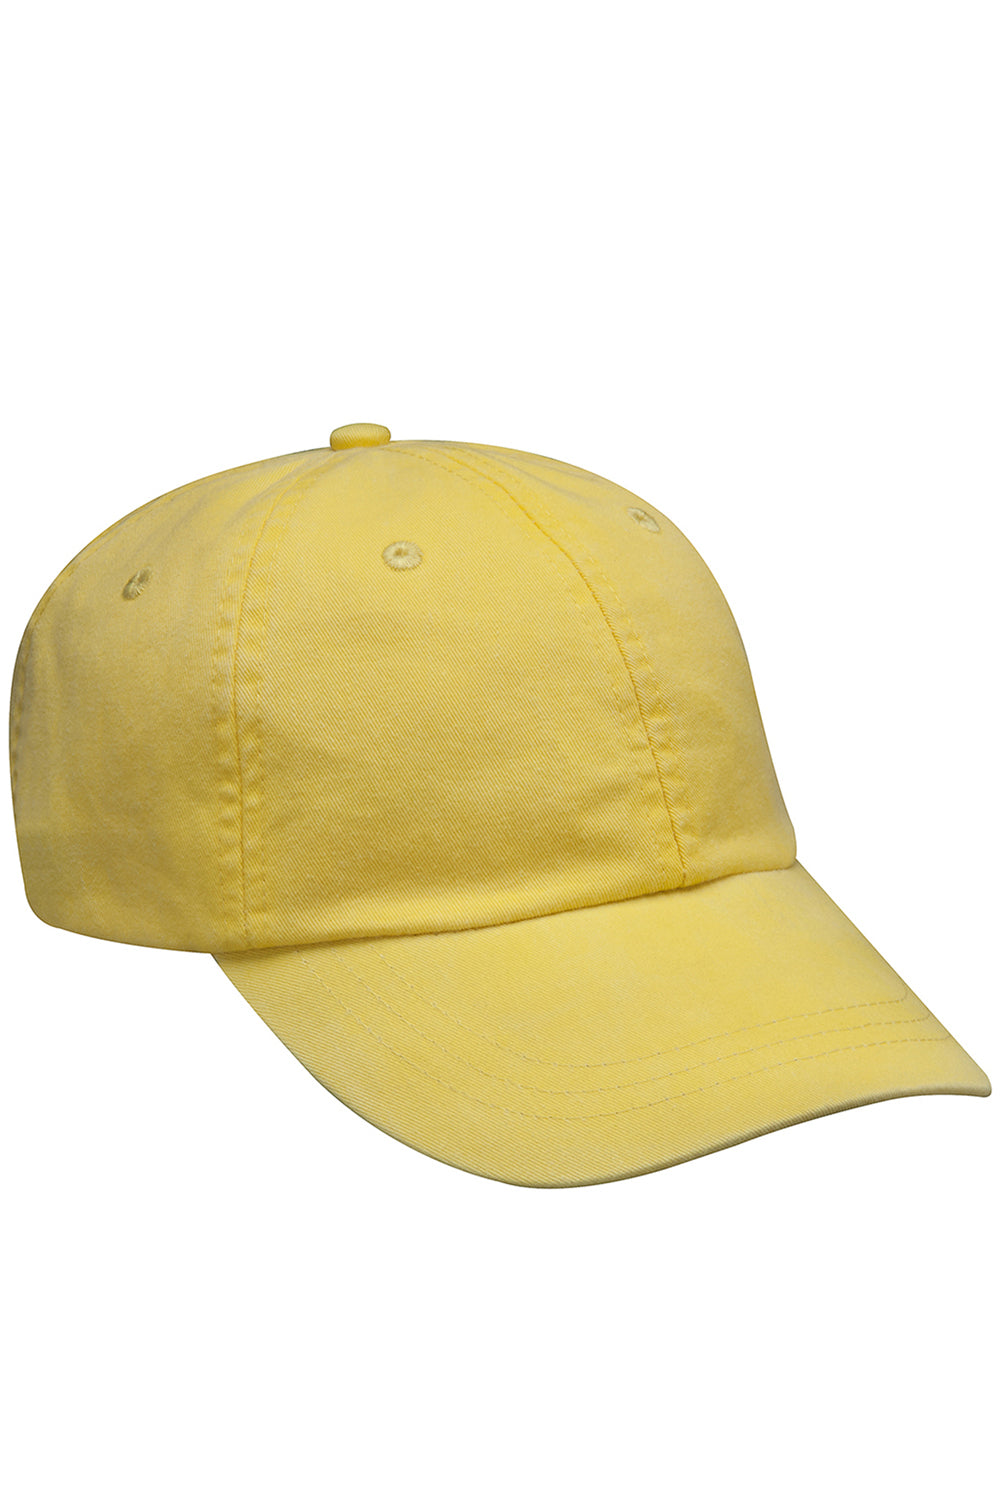 Adams AD969 Mens Adjustable Hat Lemon Yellow Flat Front